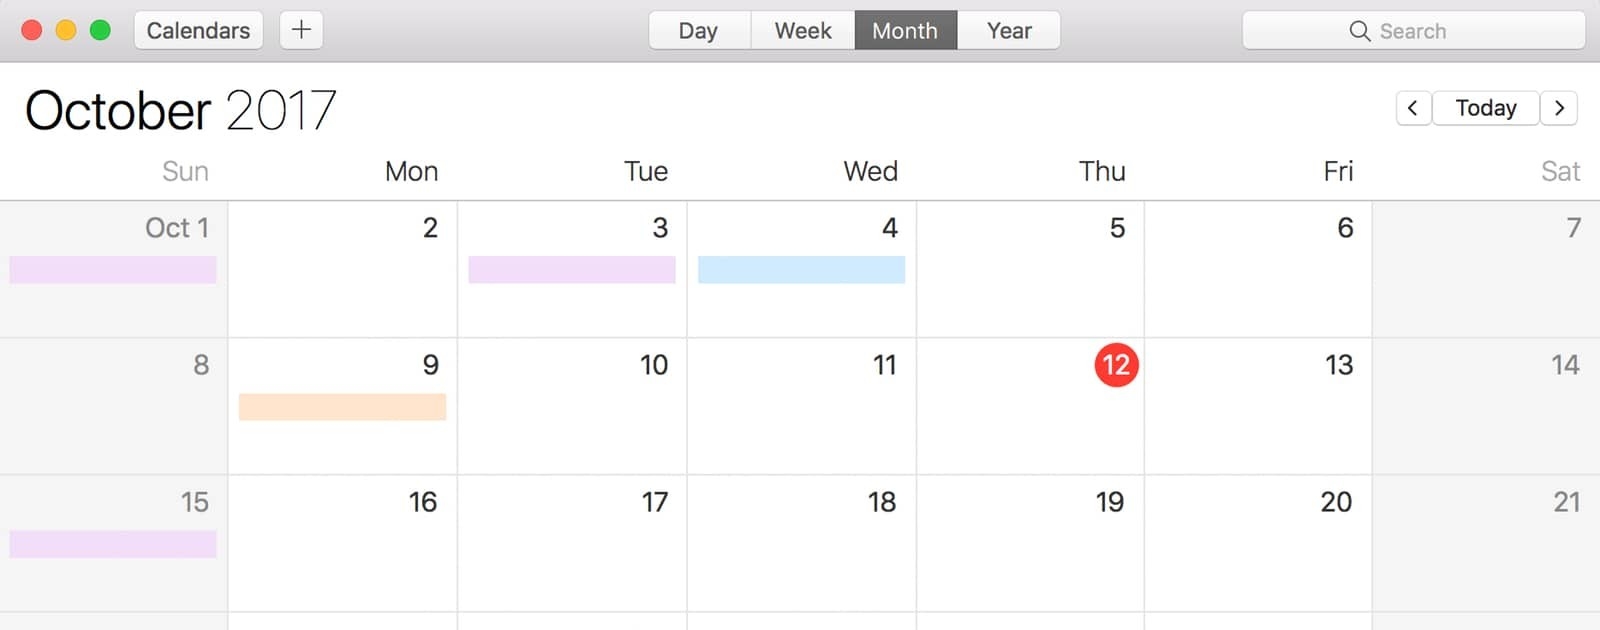 Add Us Holidays To Google Calendar - Bgadv-Google Calendar Us Holidays